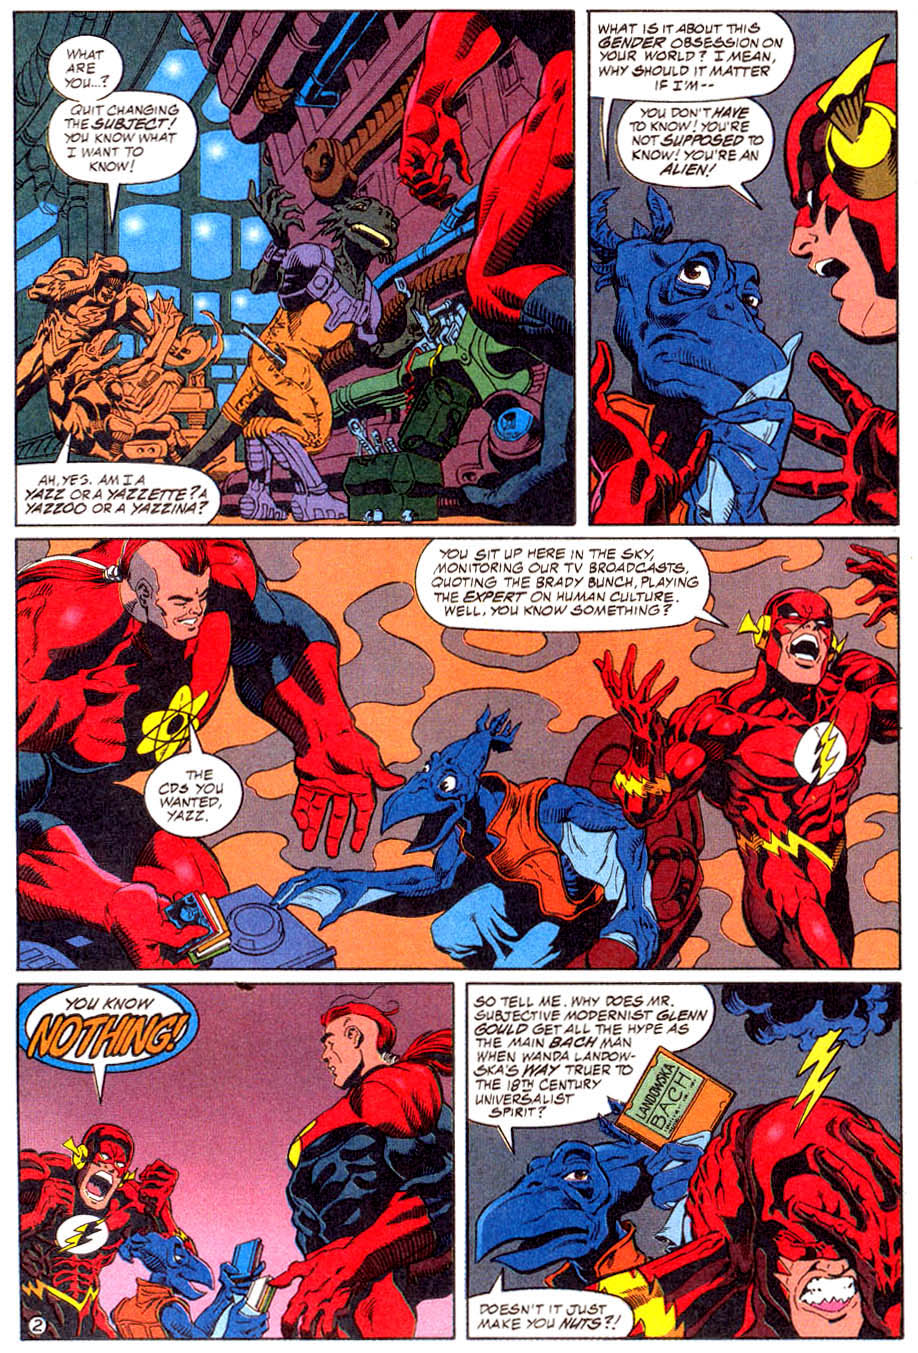 Justice League America 109 Page 2